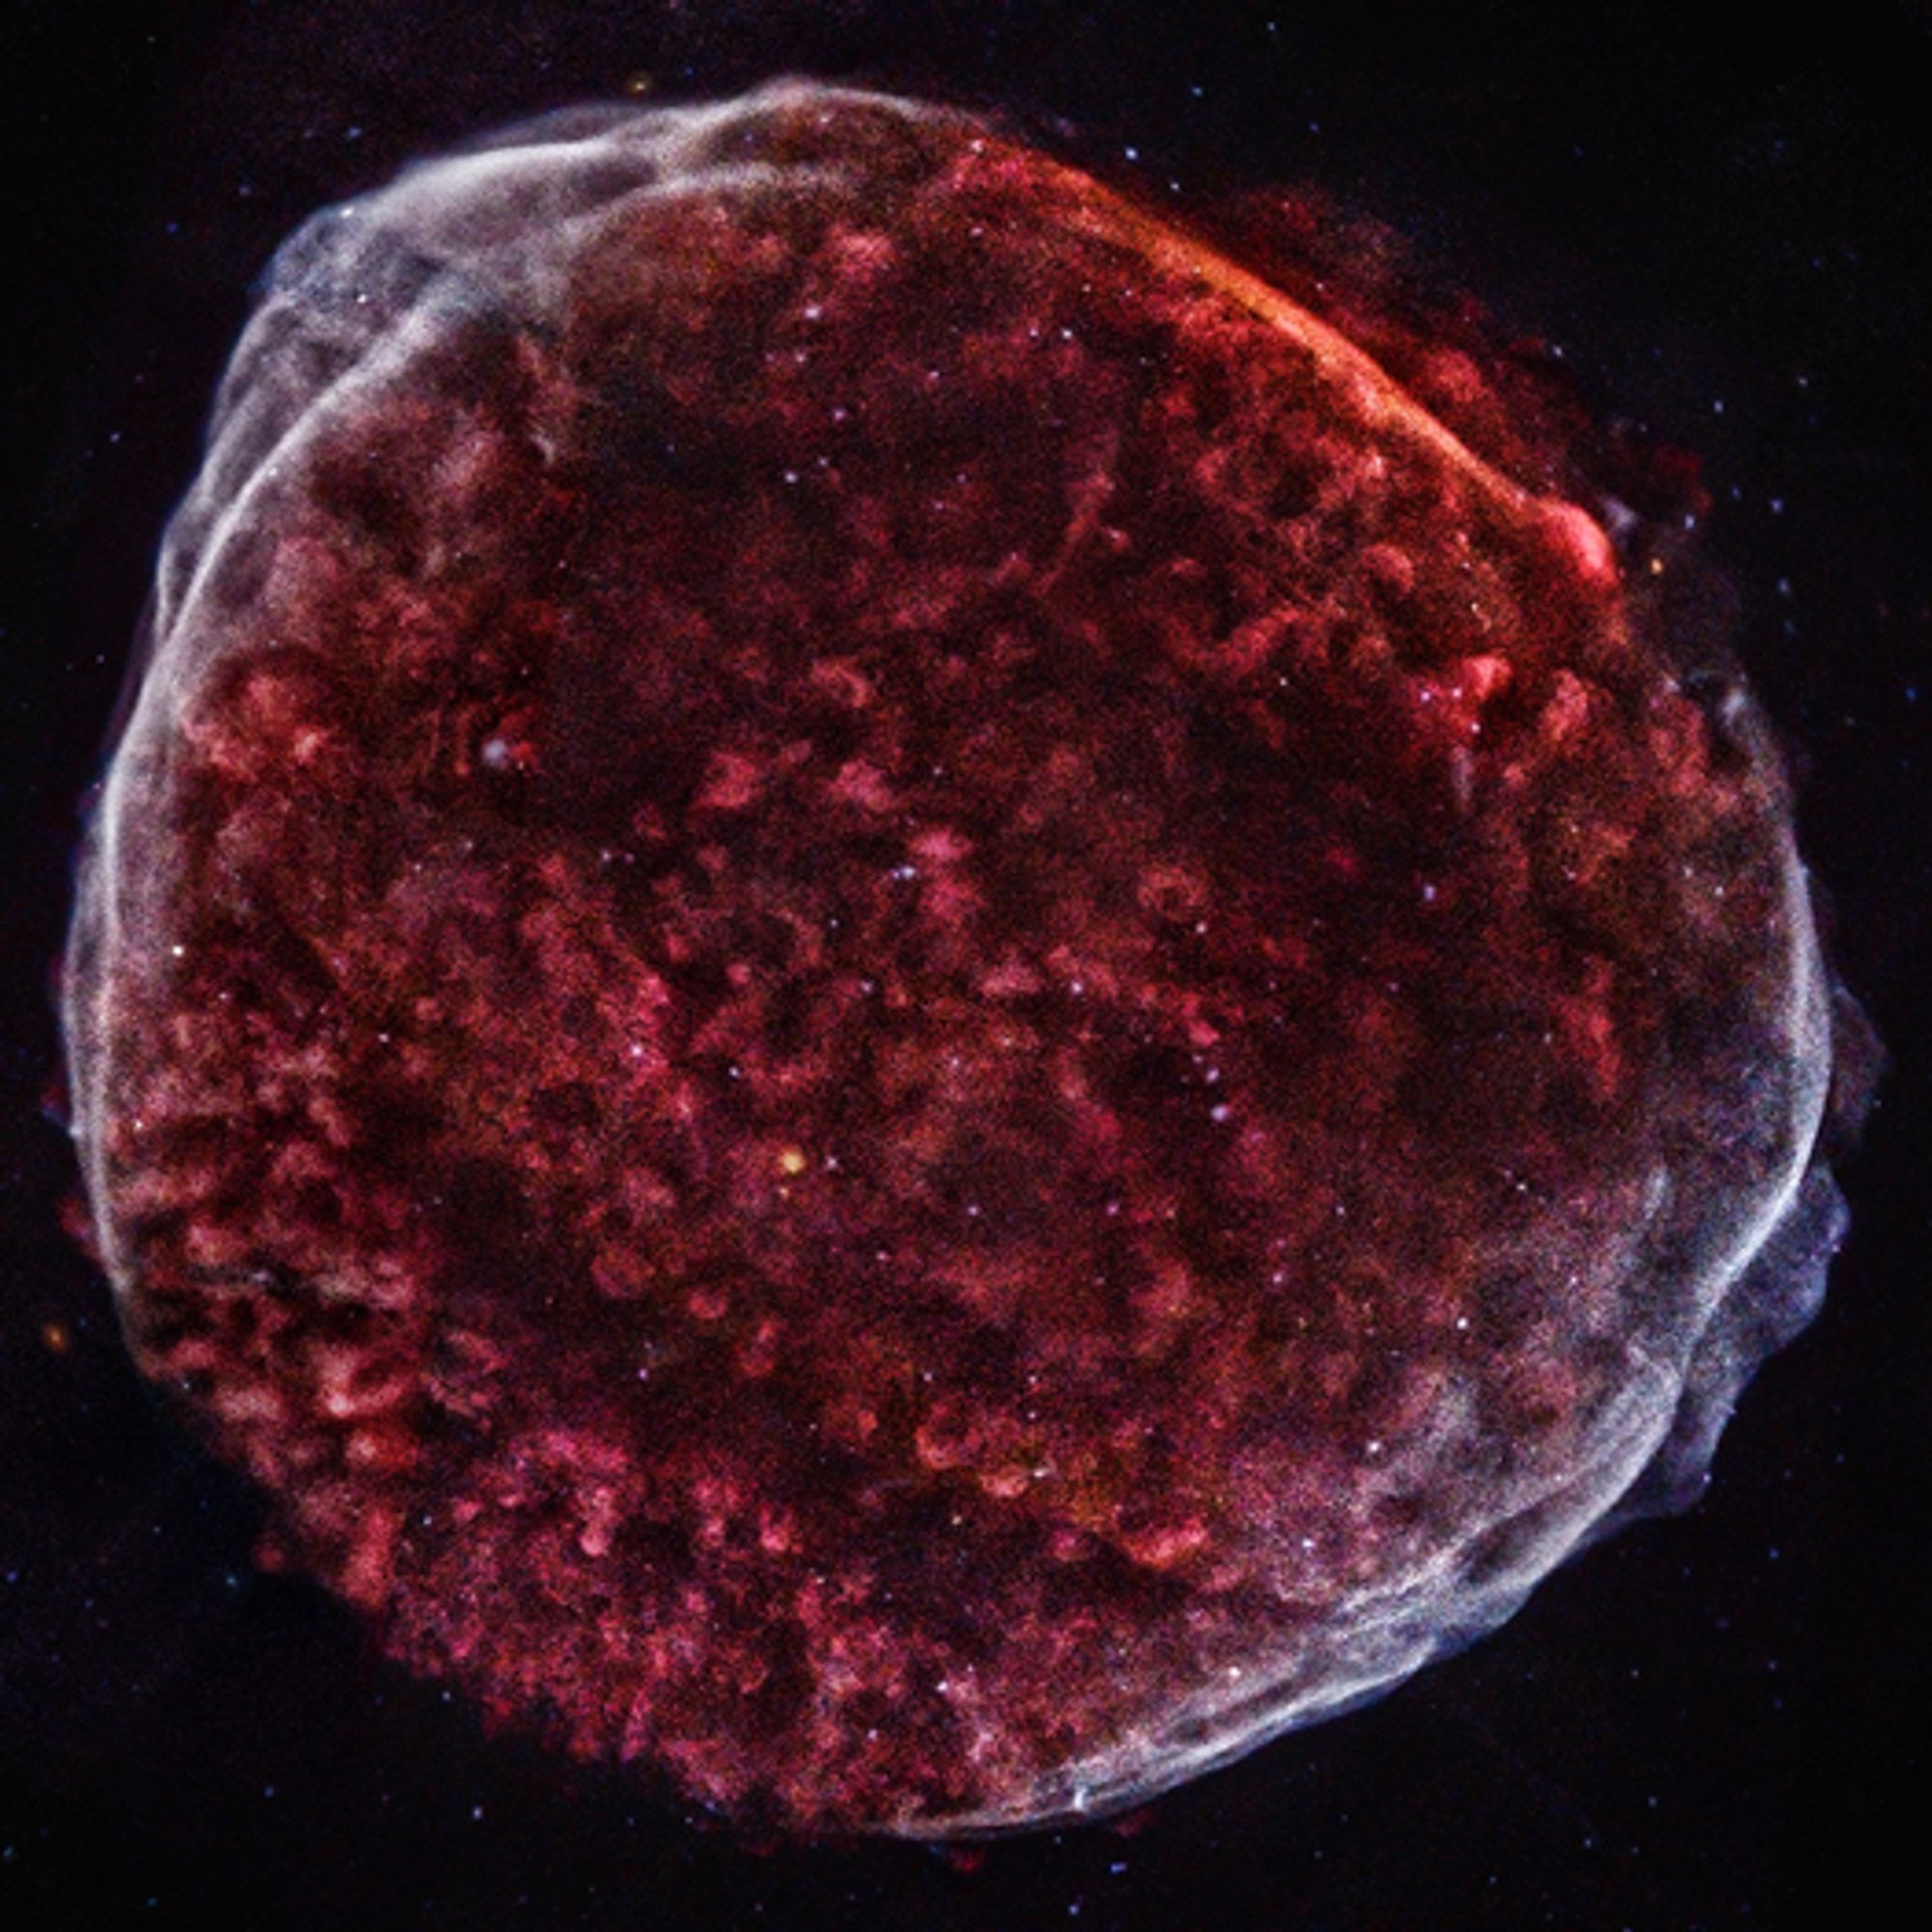 False-color X-ray image of SN 1006 supernova remnant